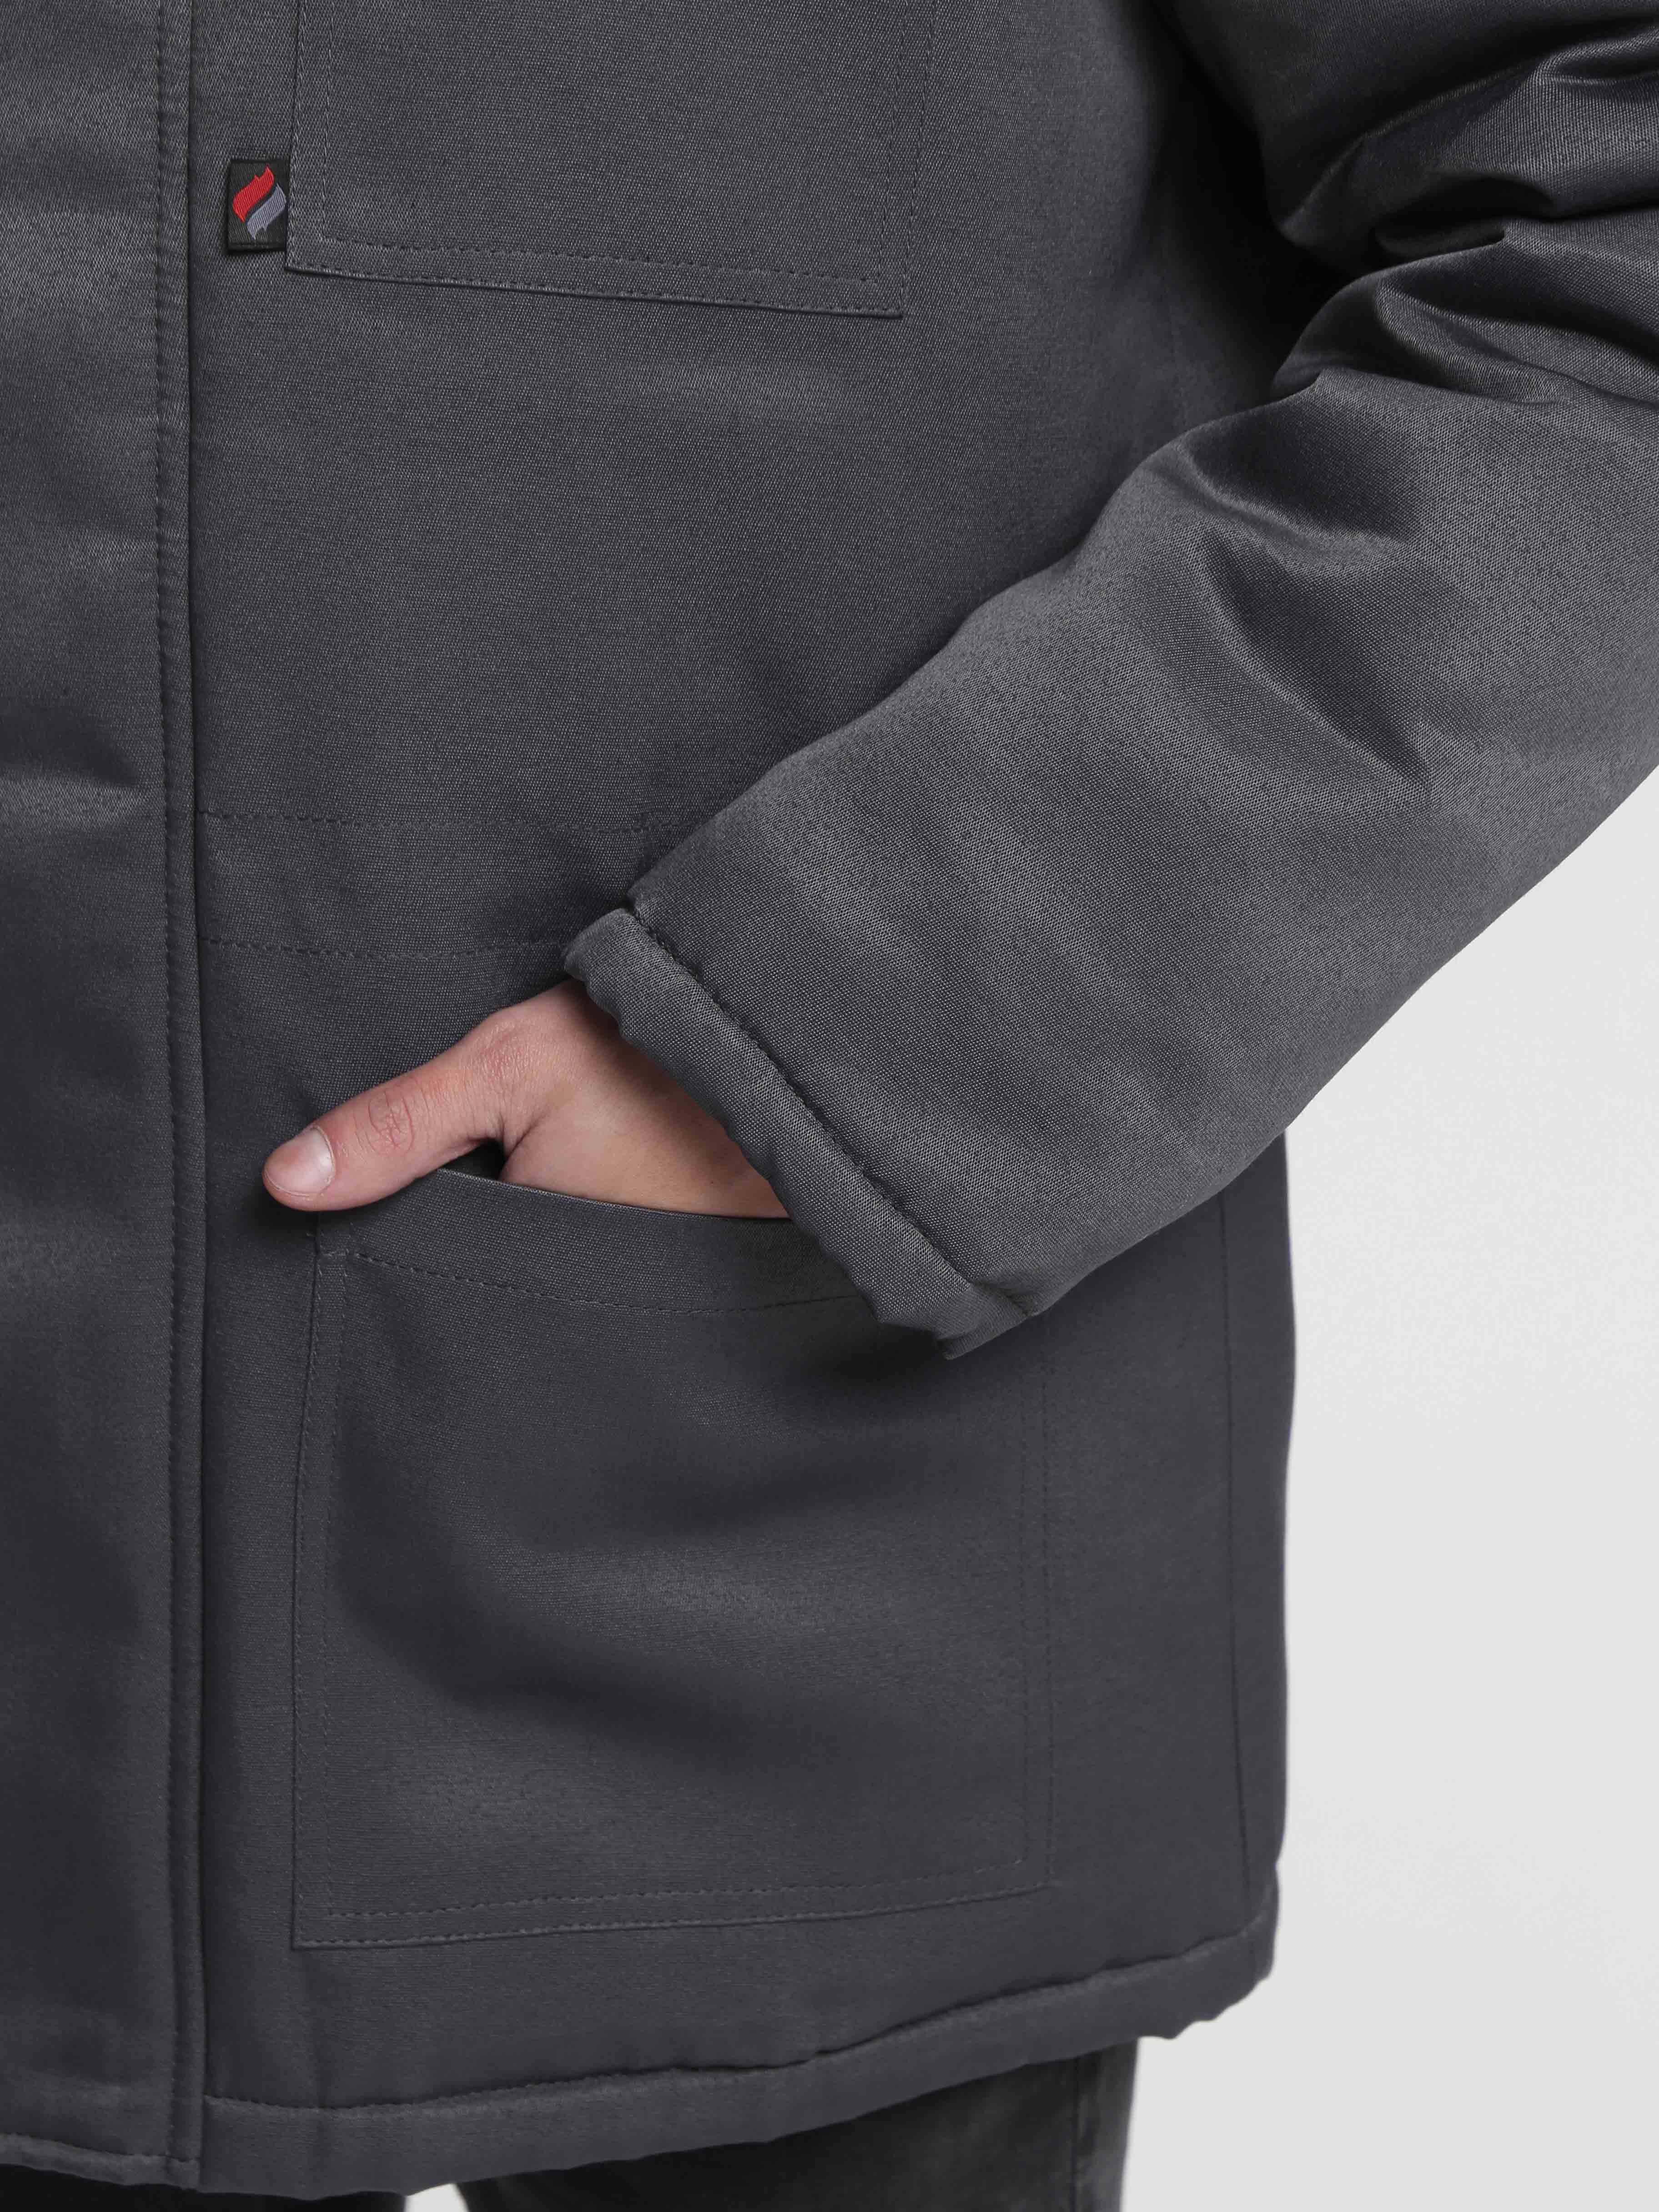 Куртка зимняя Бригада NEW (тк.Смесовая,210), т.серый/красный